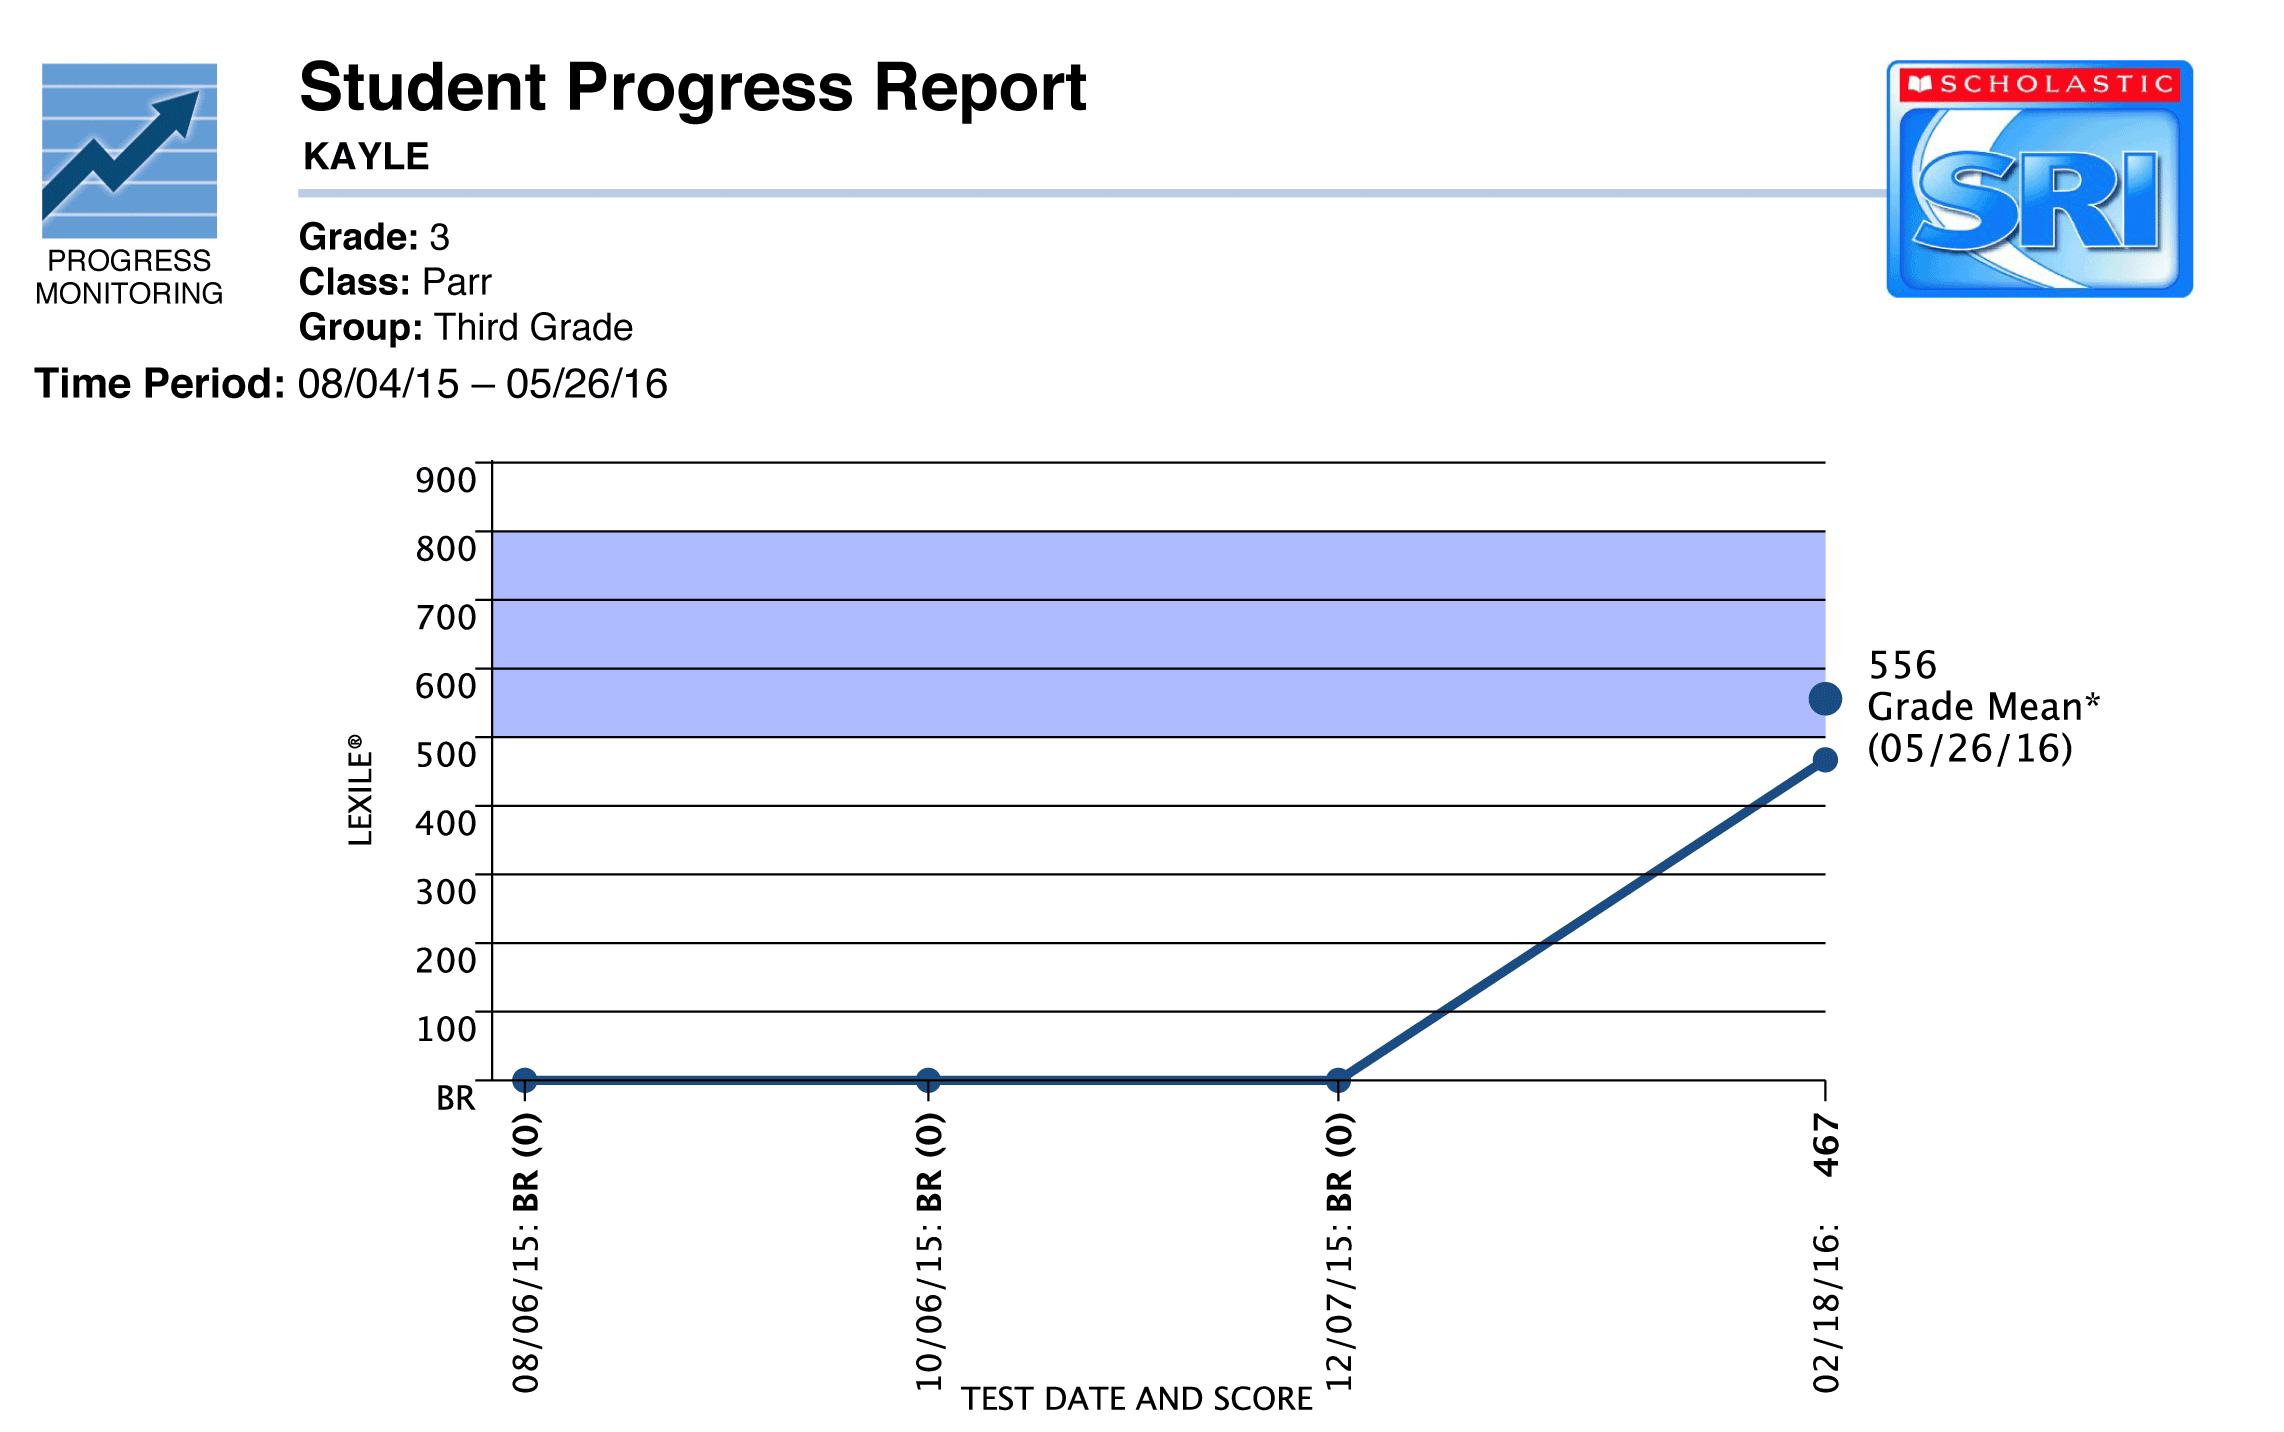 Chart showing Progress Monitoring Kayle's student progress report results